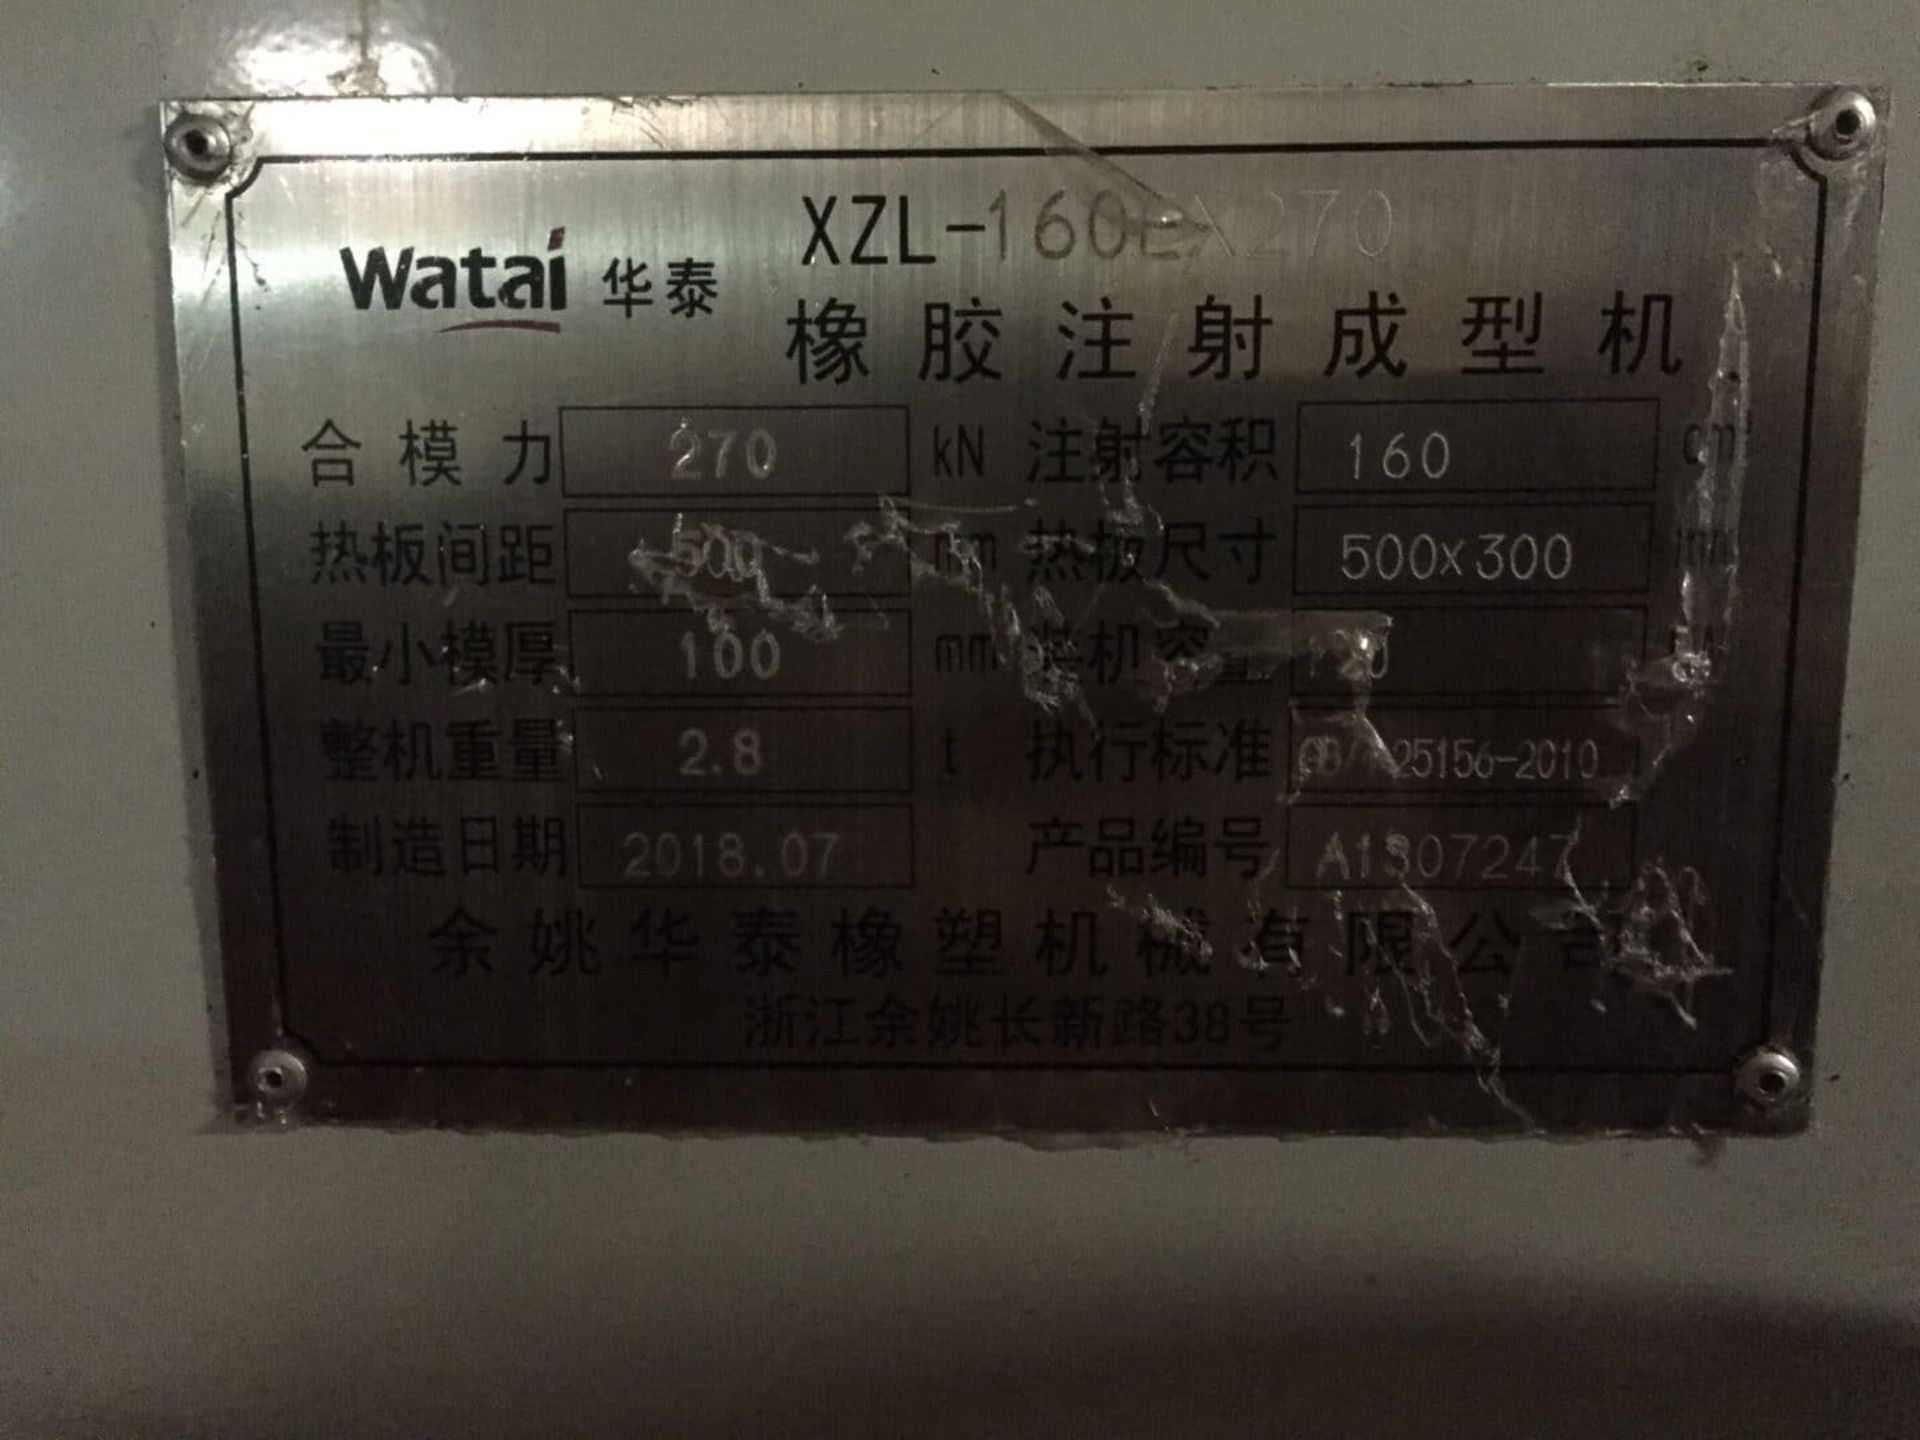 Watai Rubber Injection Molding Machine XZL-160EX27 - Image 2 of 22